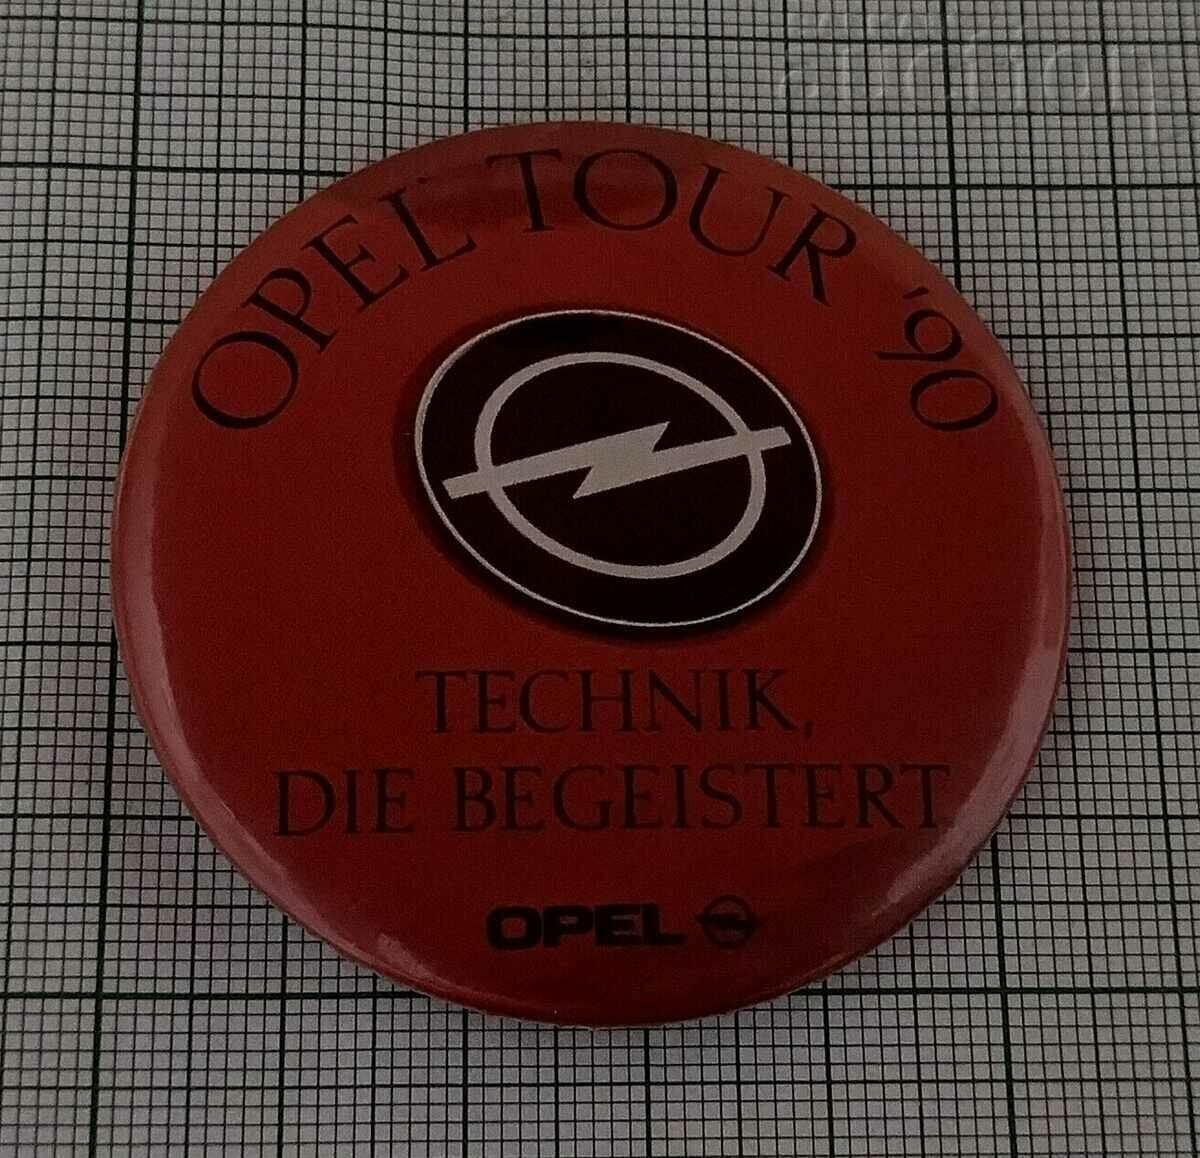 OPEL TOUR '90 TECHNIK DIE BEGEISTERT LOGO BADGE